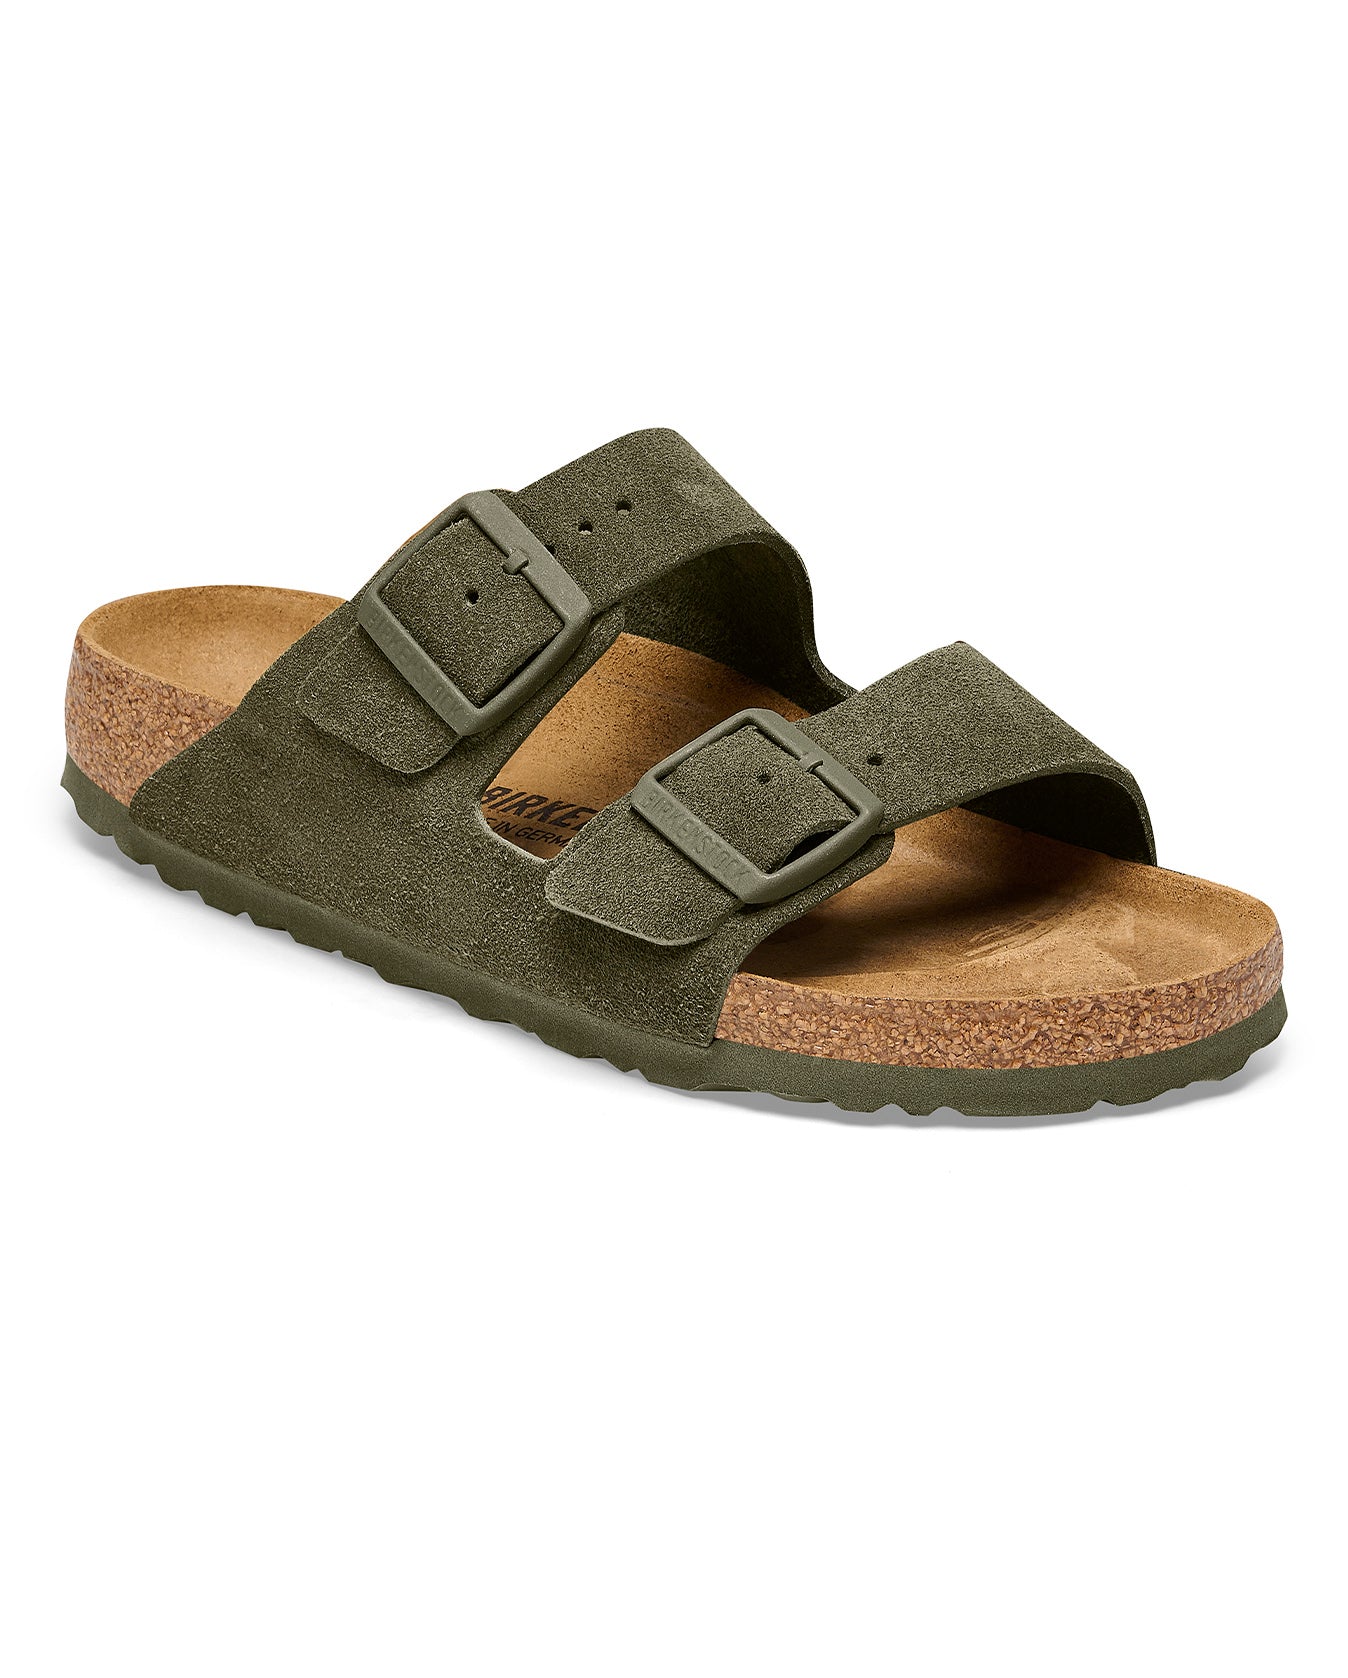 Birkenstock Arizona Taupe Suede Narrow Fit Flat Sandals